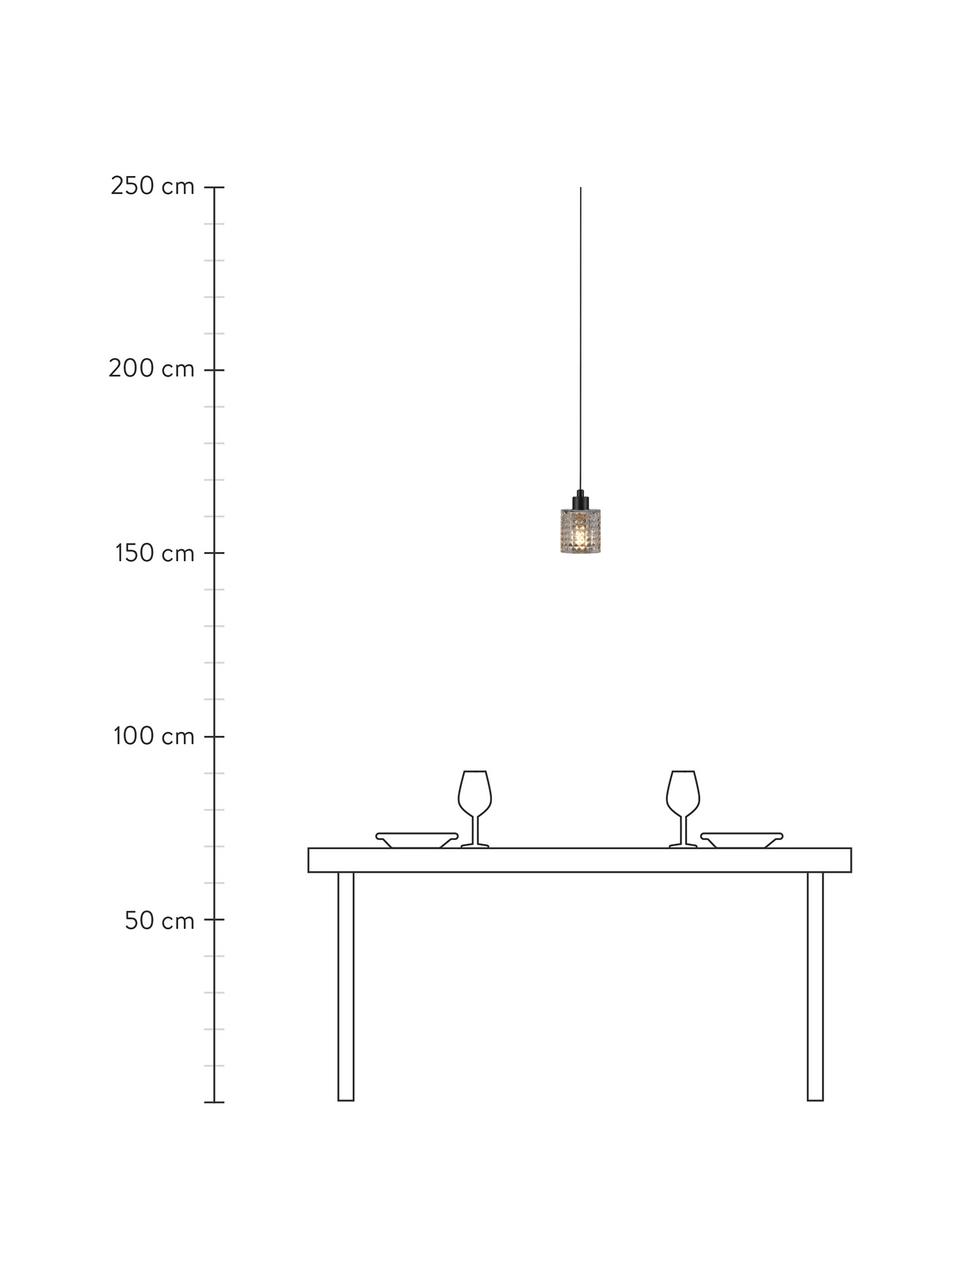 Kleine hanglamp Hollywood van glas, Lampenkap: glas, Baldakijn: gecoat metaal, Crèmewit, Ø 11 x H 18 cm